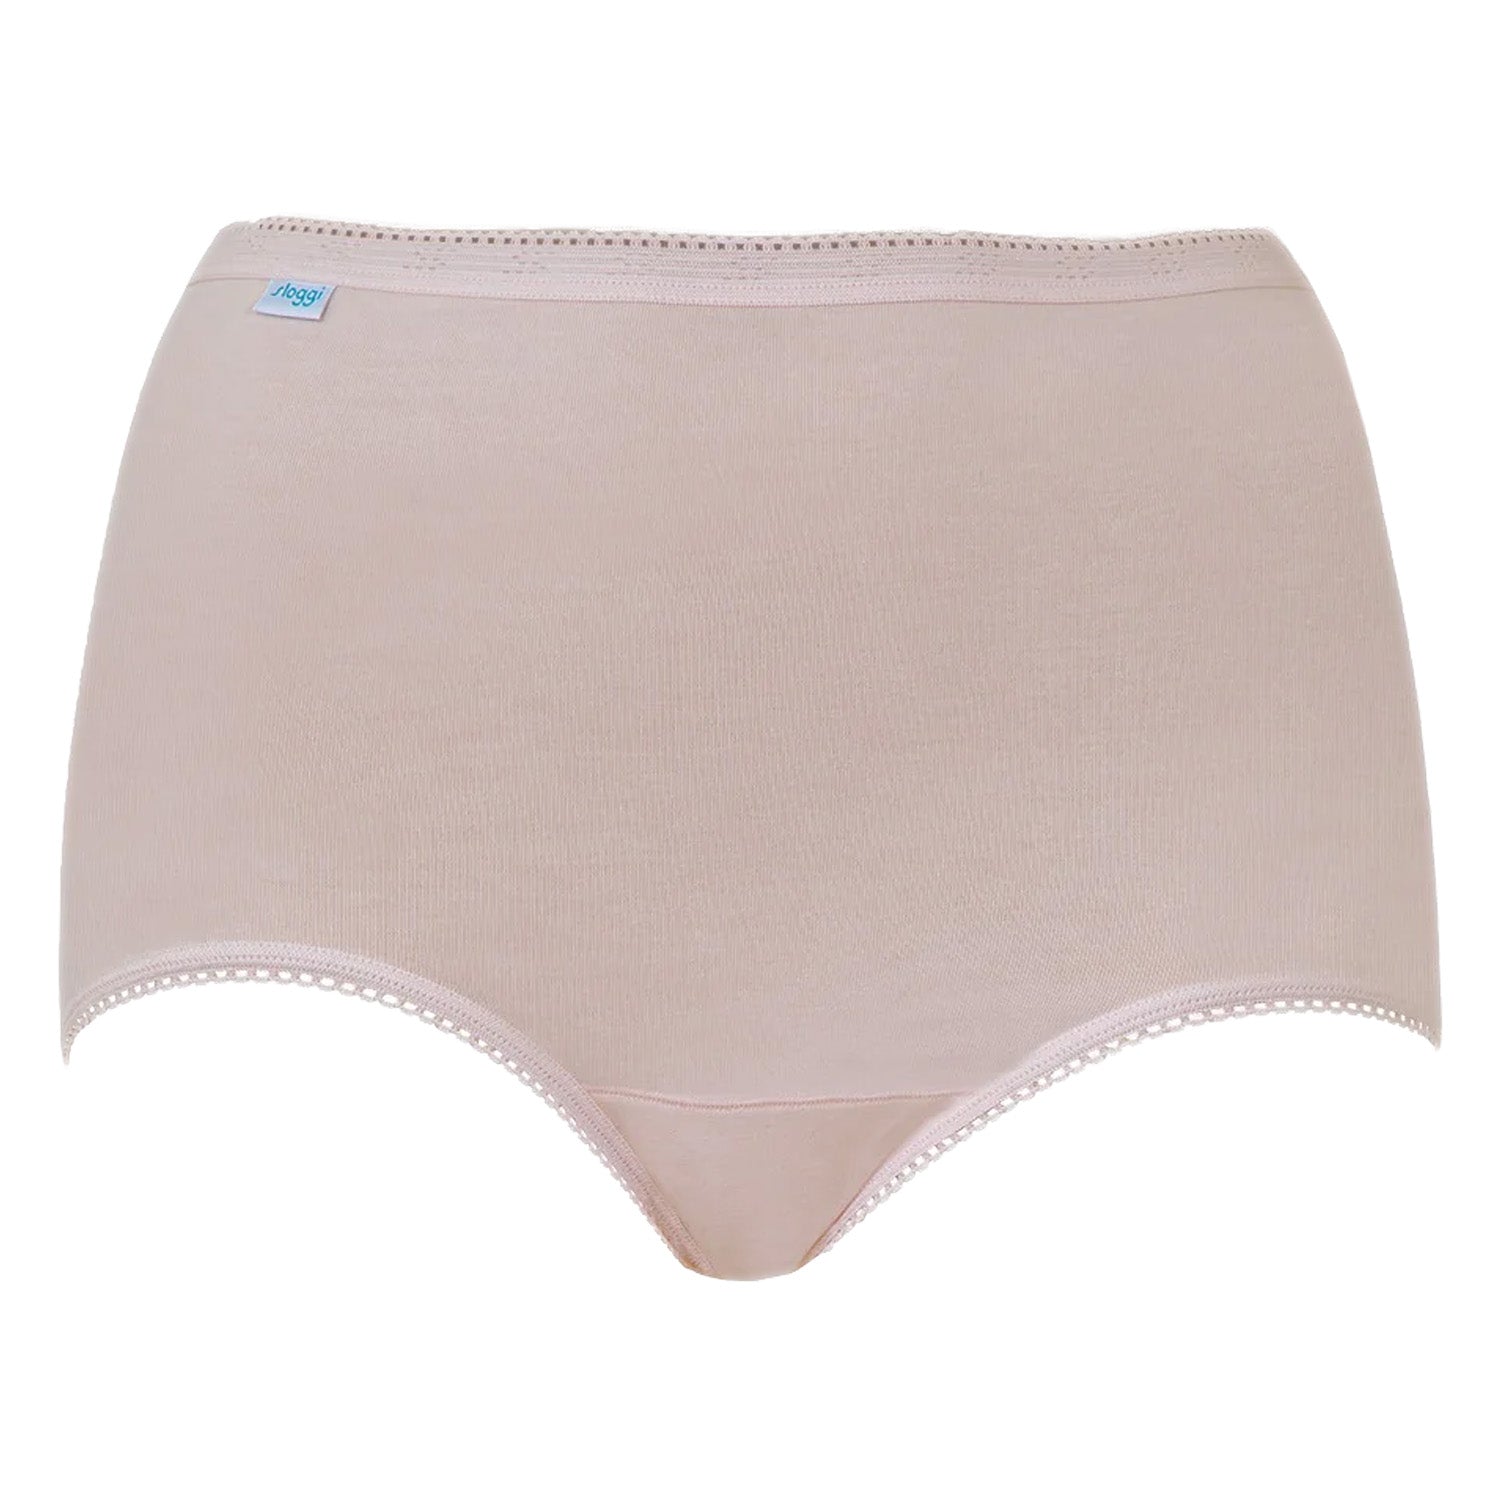 Sloggi Originals Maxi Briefs Womens Ladies Underwear Panties Pink